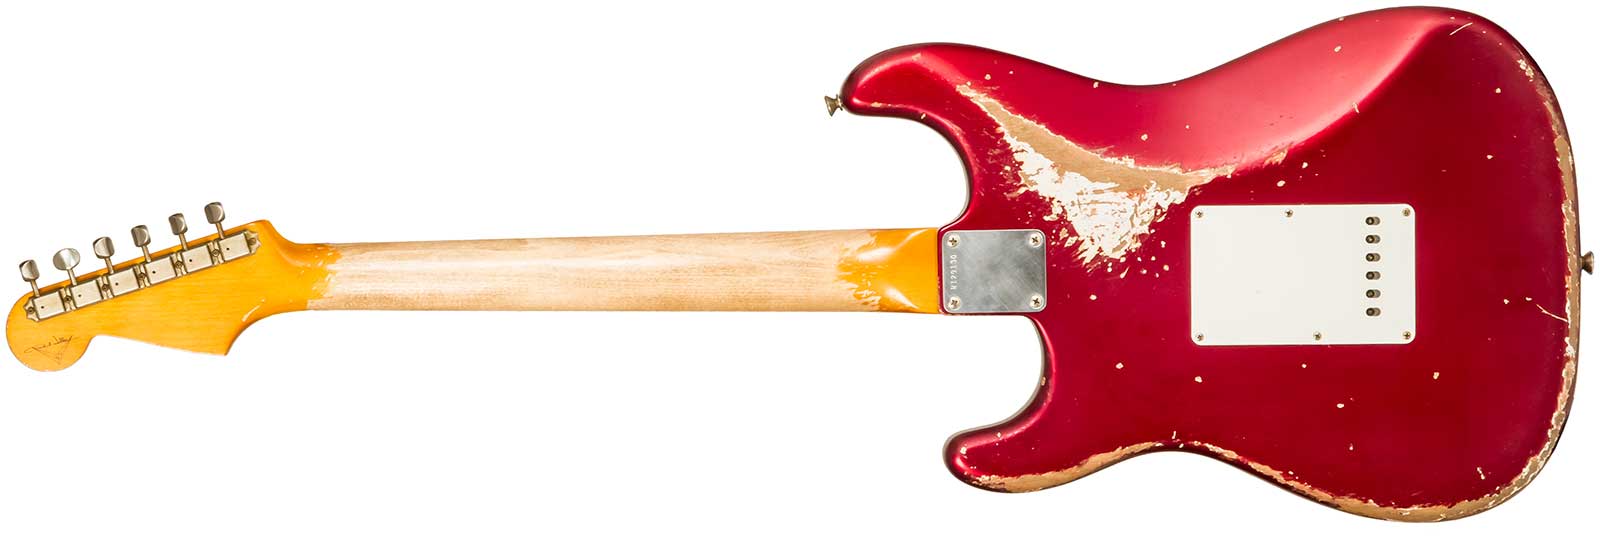 Fender Custom Shop Strat 1964 Masterbuilt P.waller 3s Trem Rw #r129130 - Heavy Relic Candy Apple Red - Elektrische gitaar in Str-vorm - Variation 1